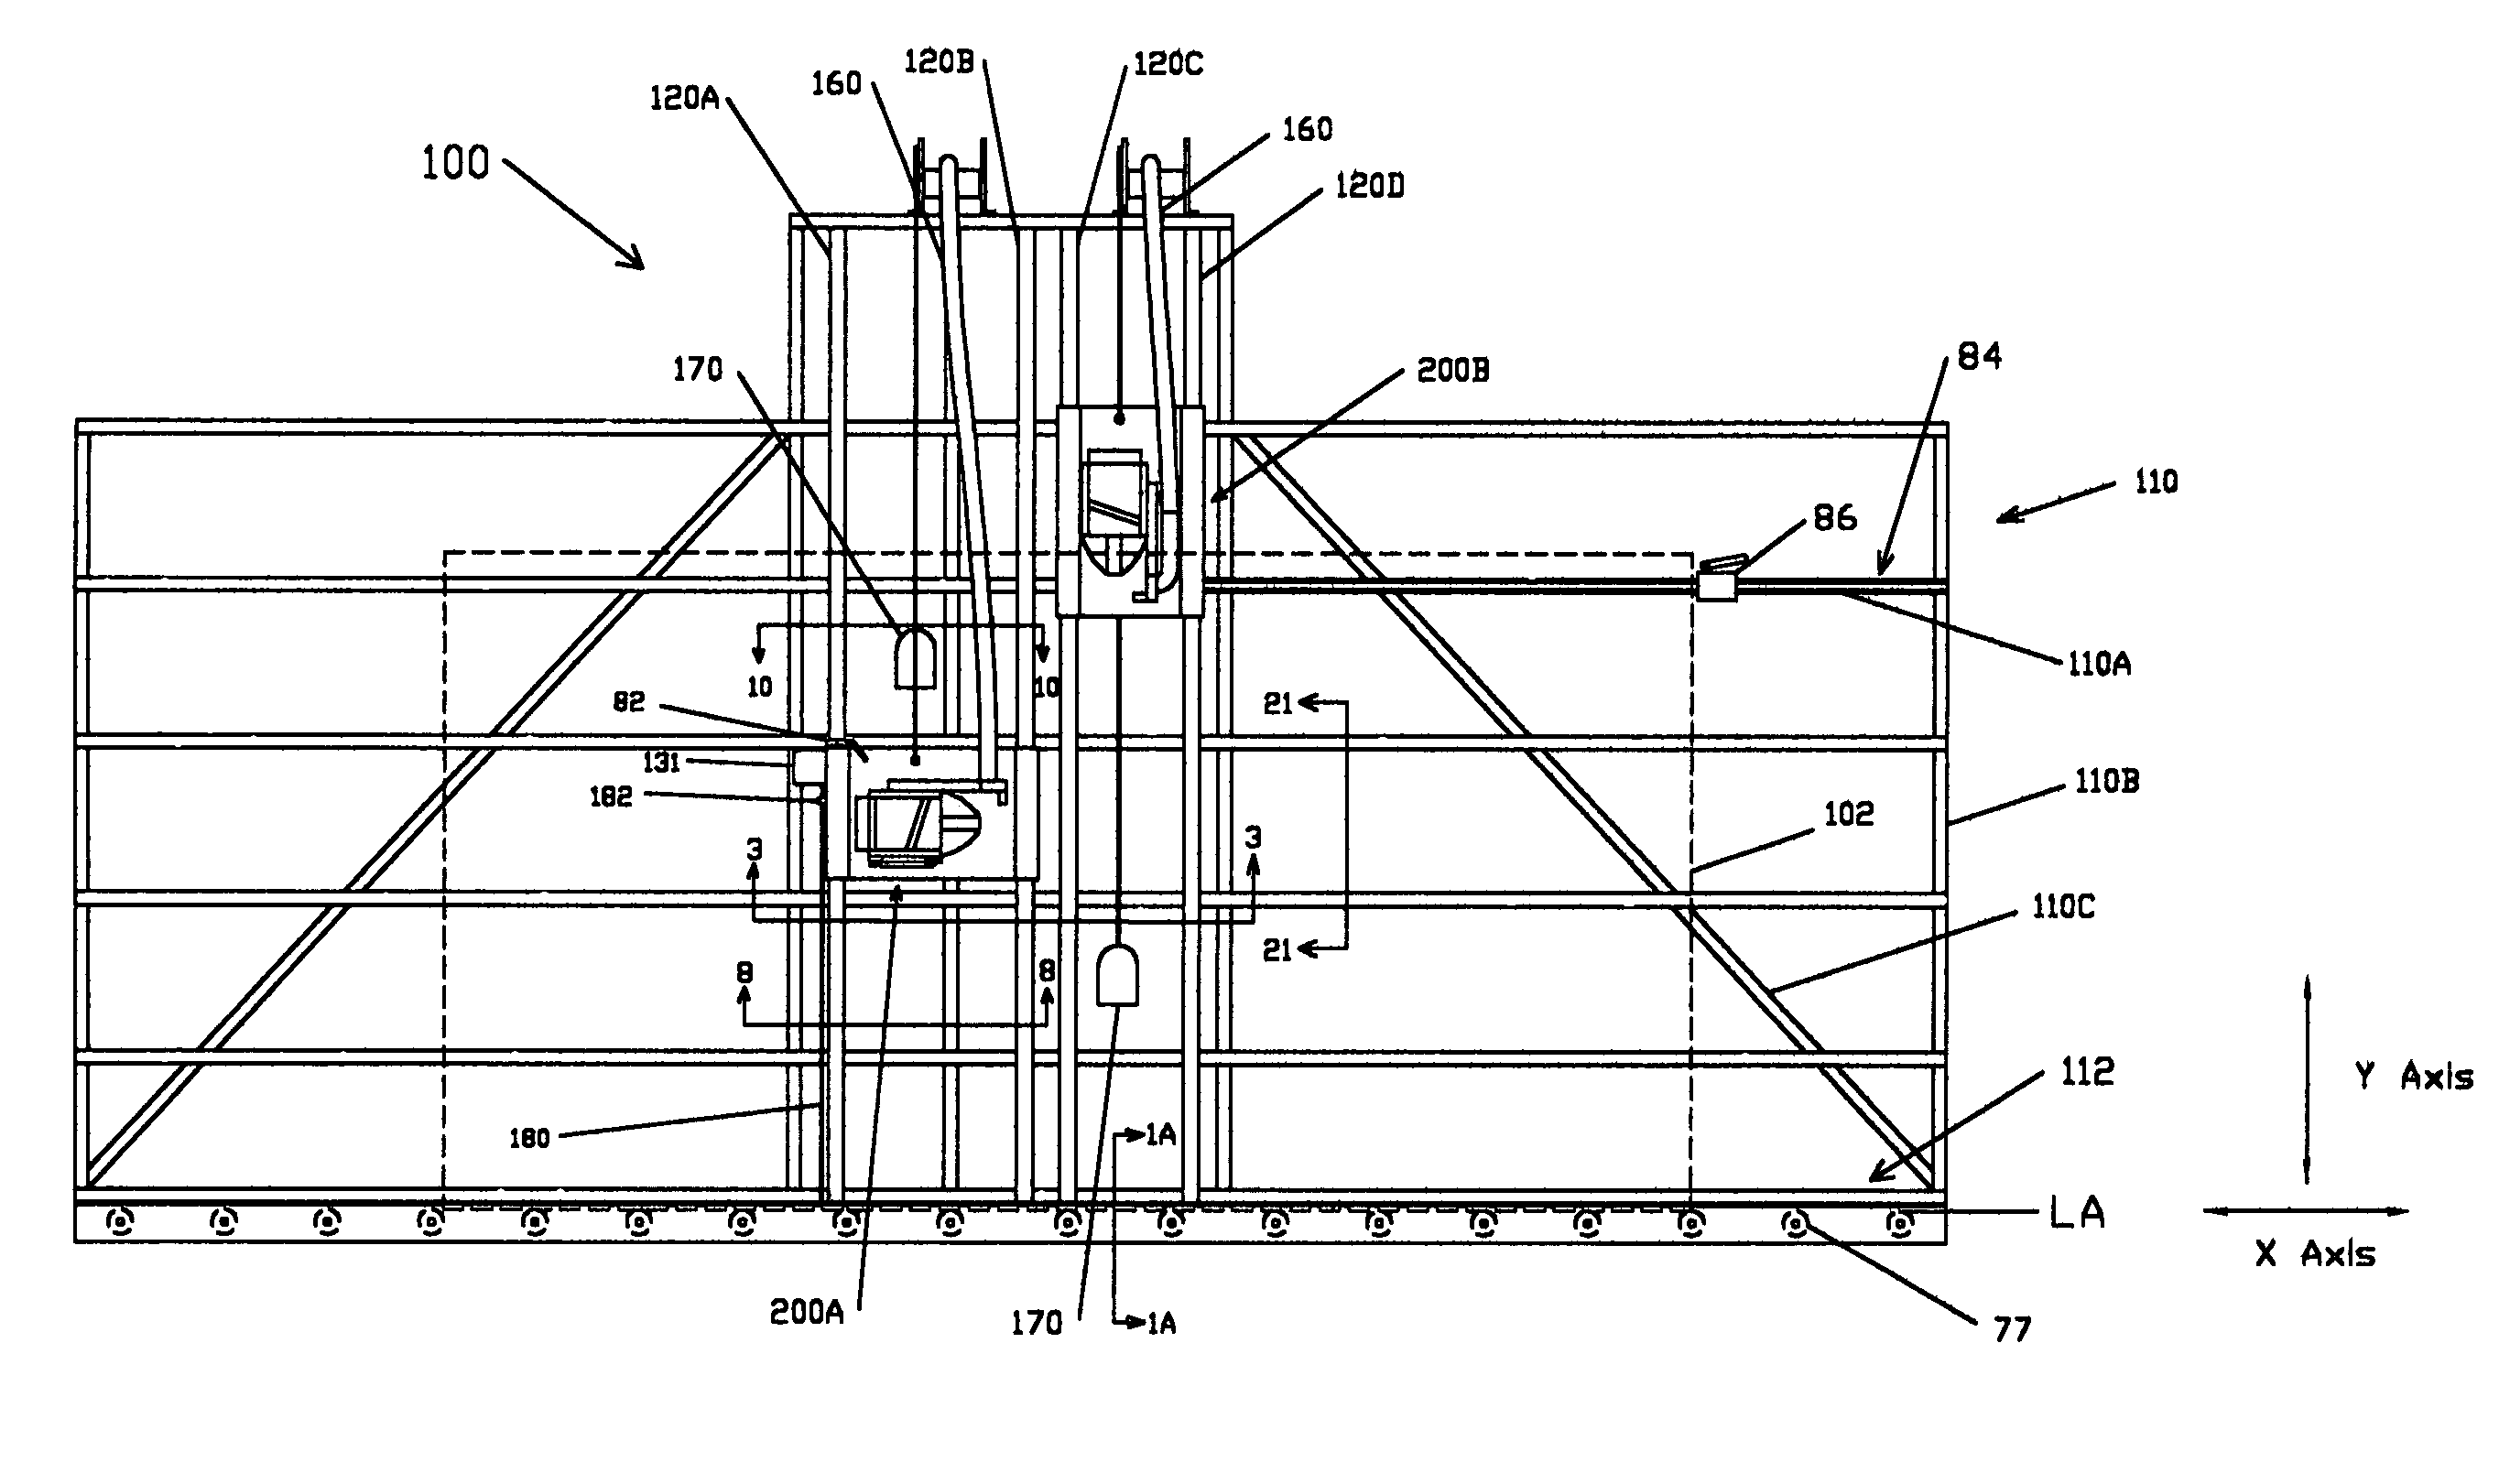 Multi-axis panel saw